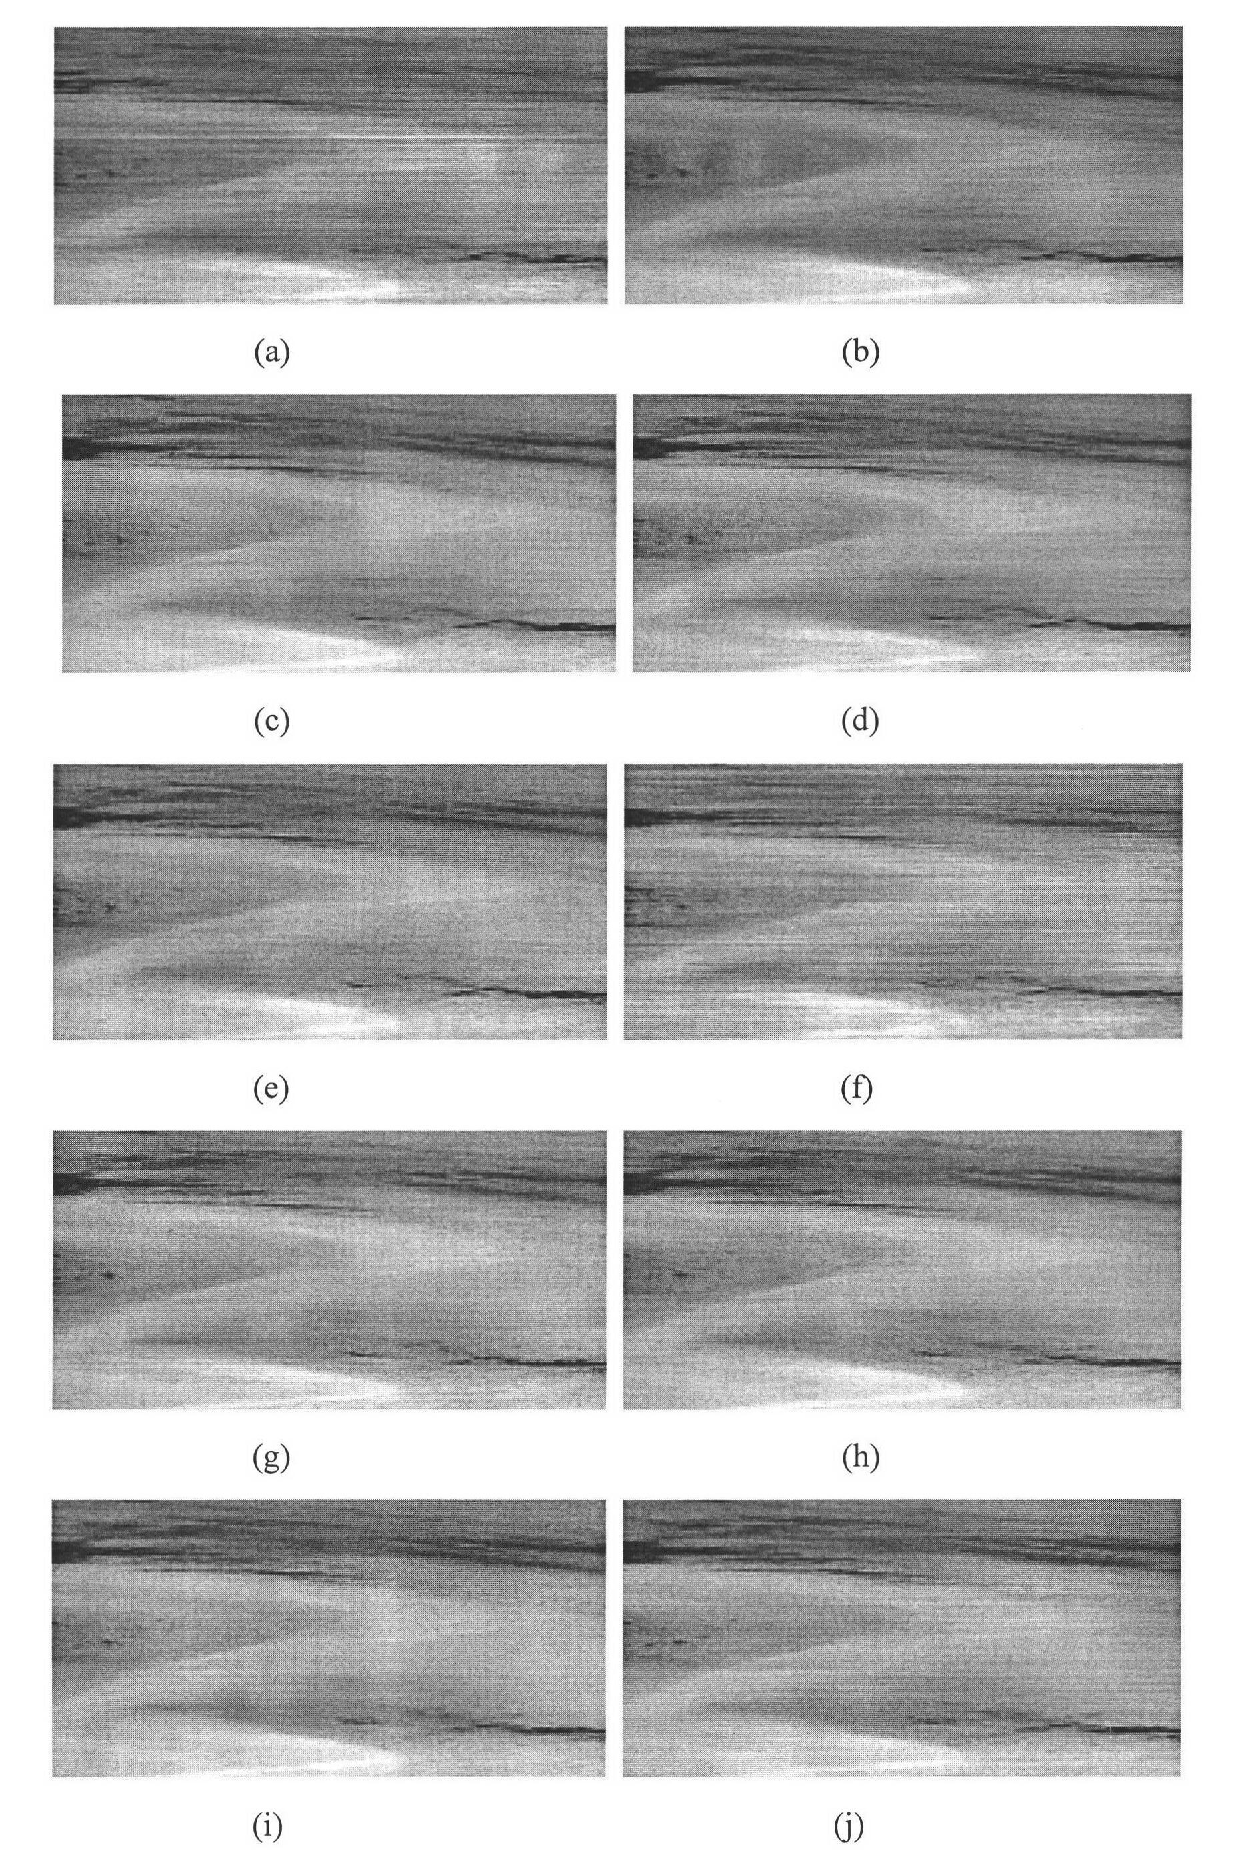 Band noise removal method for medium resolution imaging spectrometer based on variational method